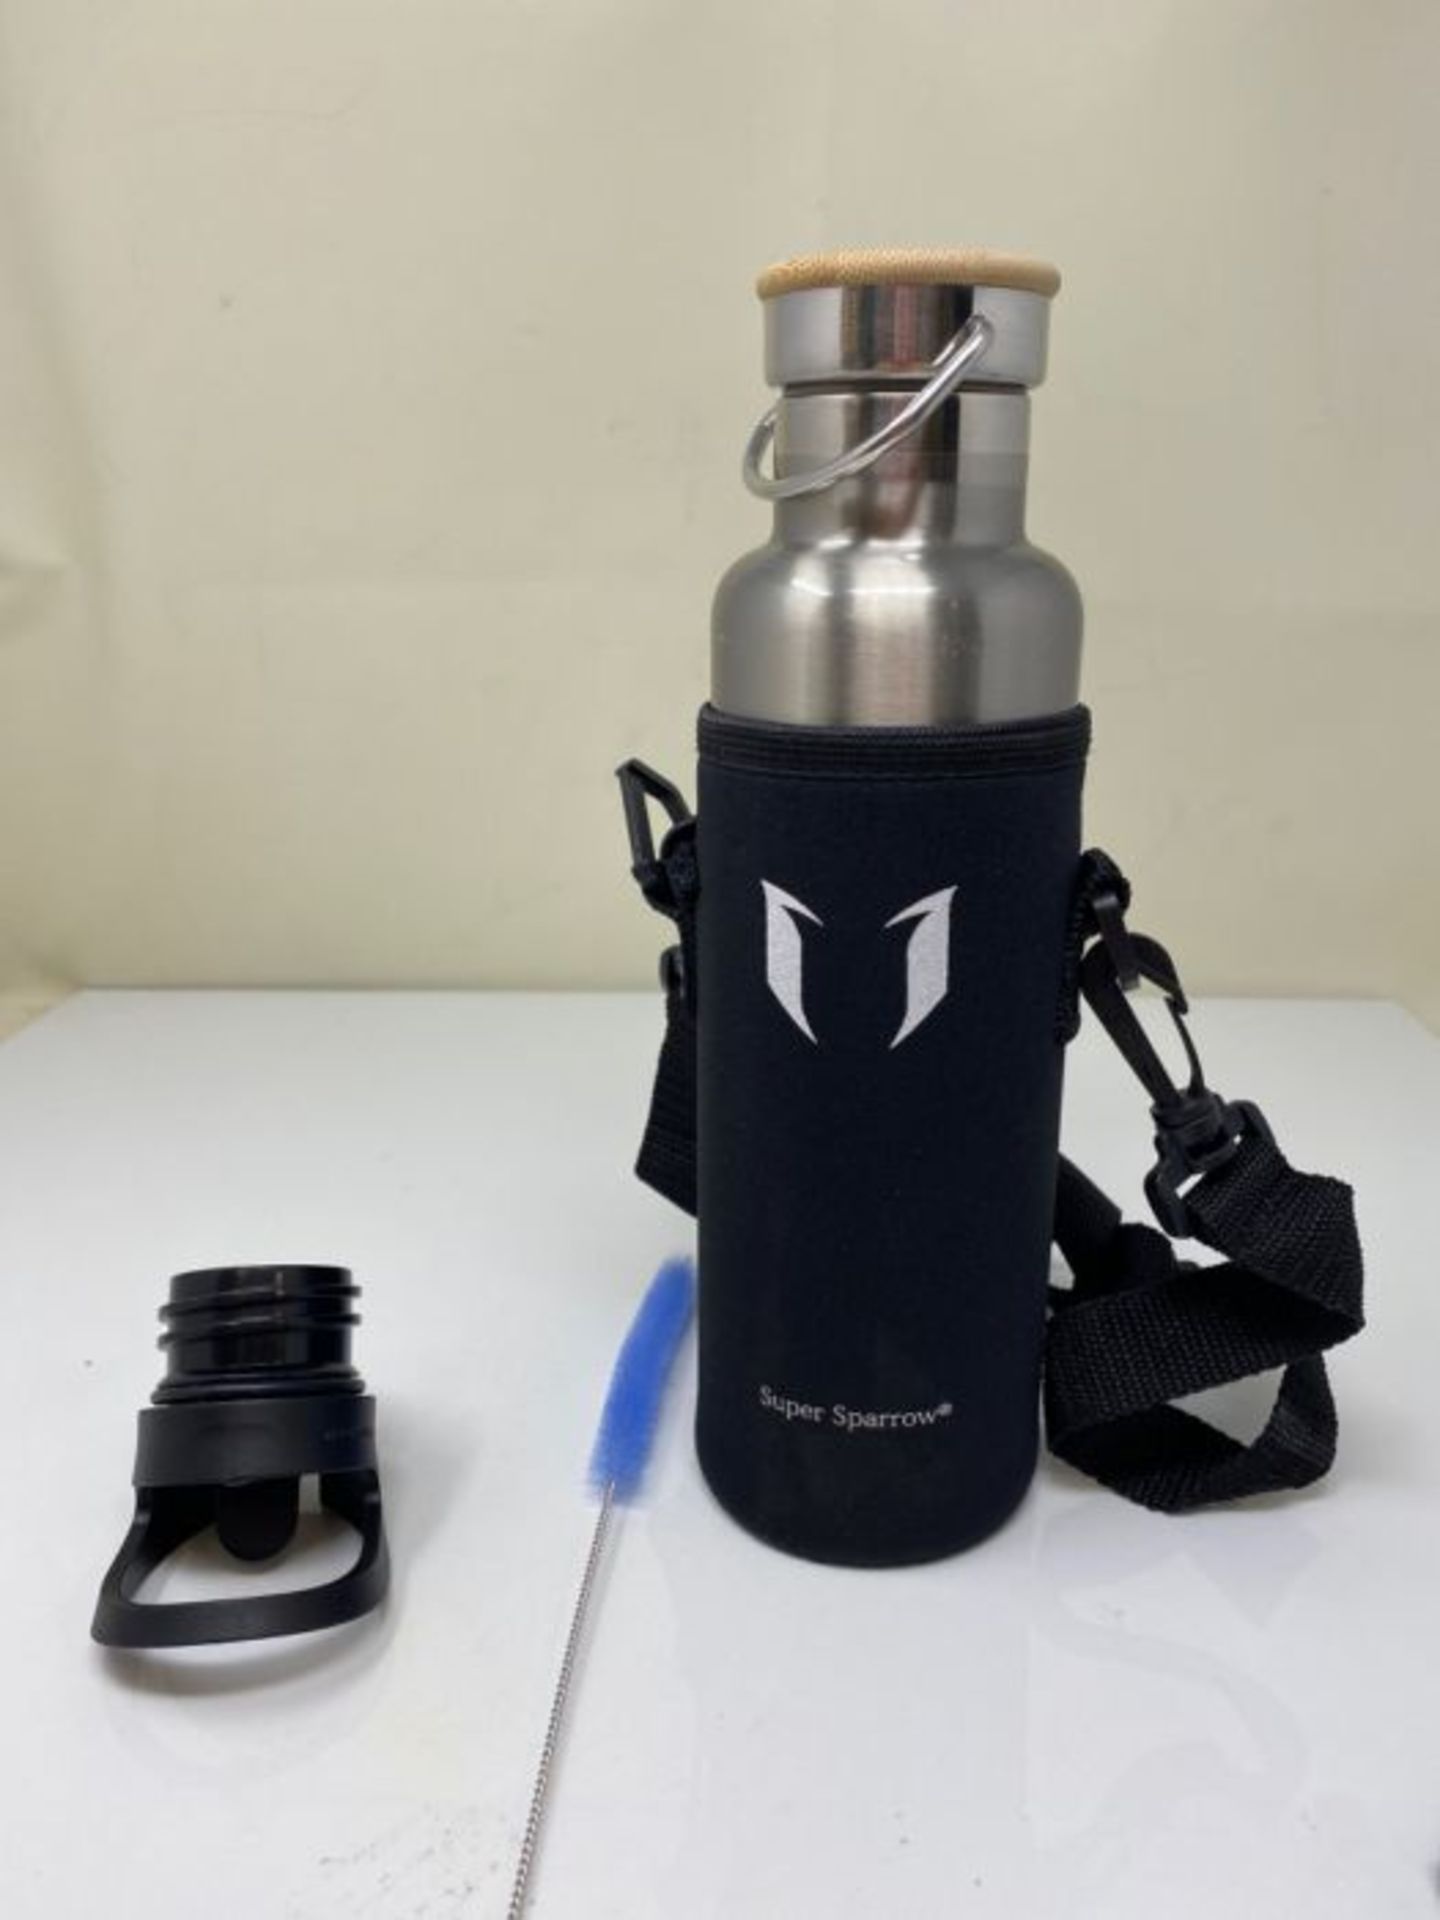 Super Sparrow Stainless Steel Water Bottle - 620ml - Vacuum Insulated Metal Water Bott - Image 3 of 3